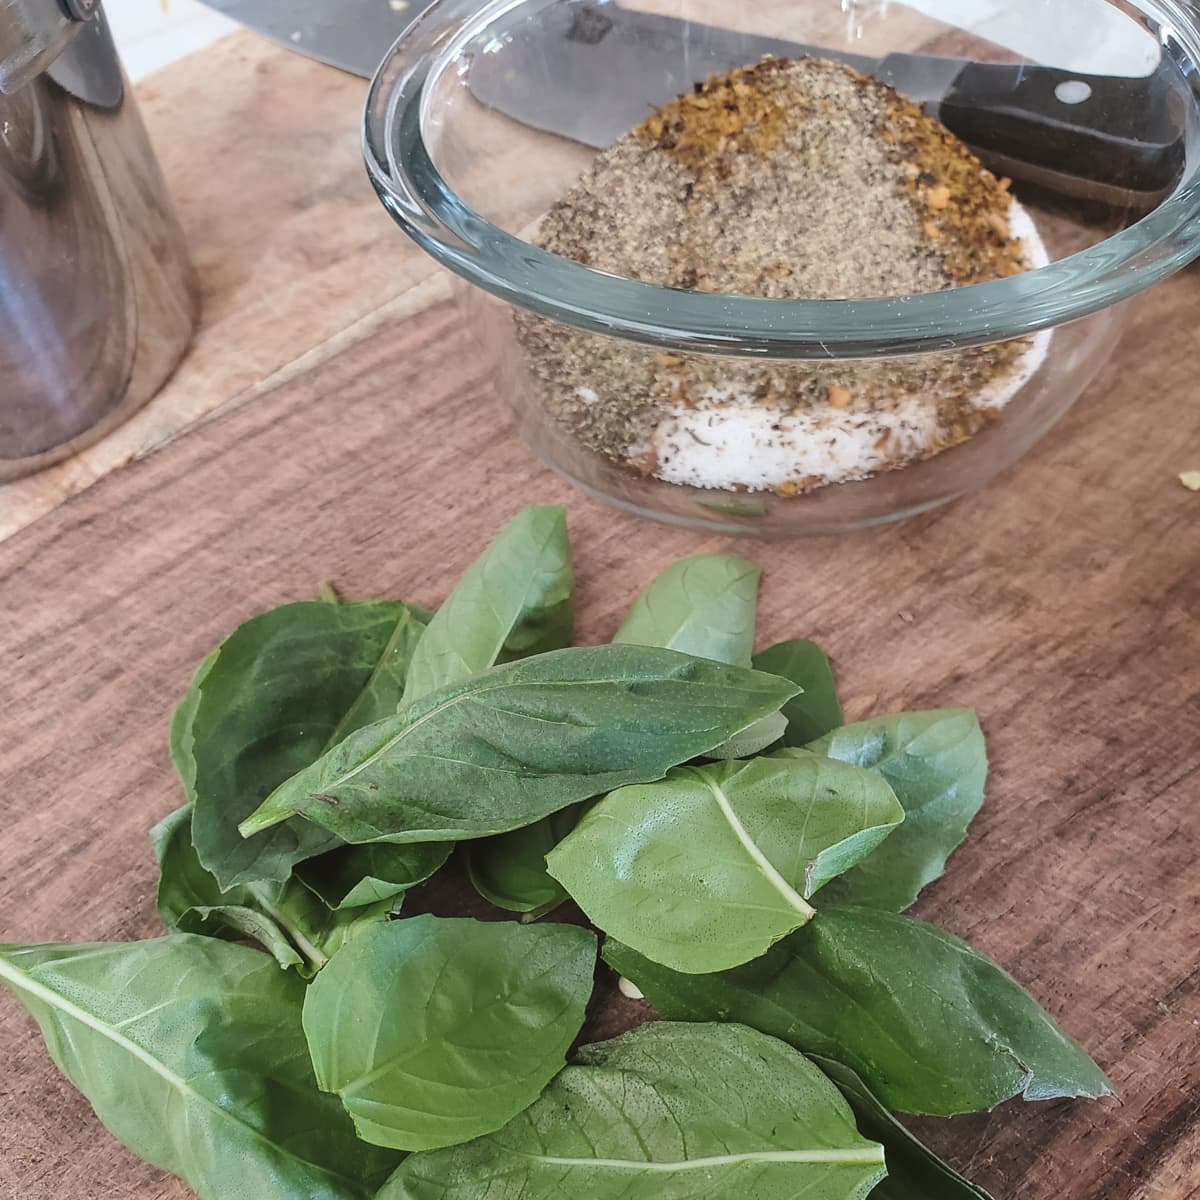 Basil, seasonings and herbs on a cutting board.